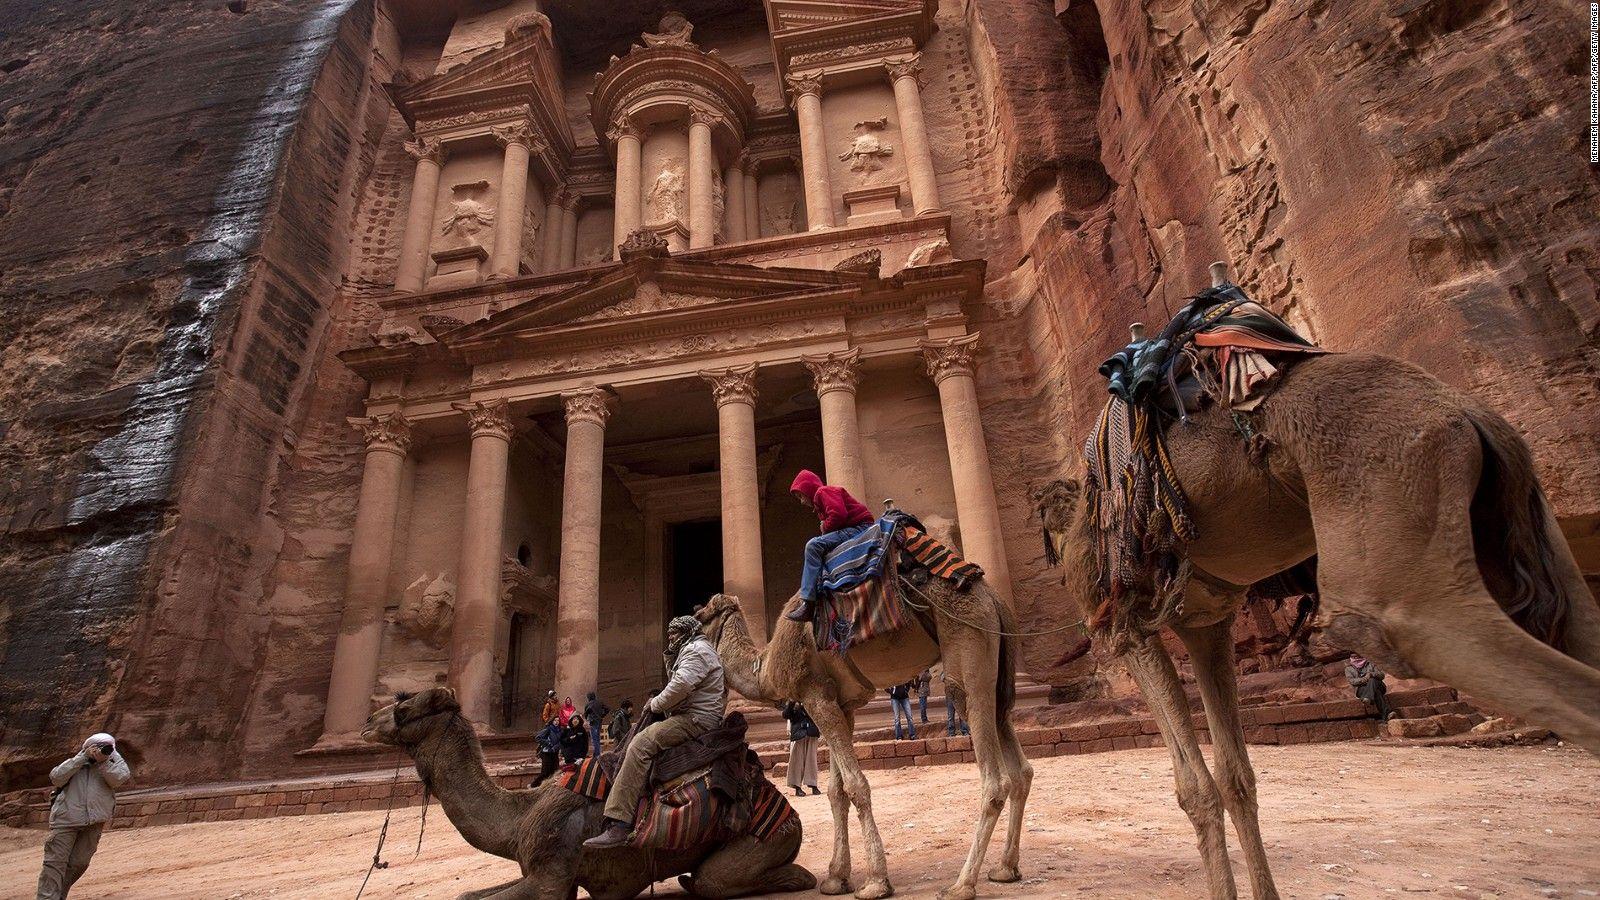 Can Jordan's 'Indiana Jones' city of Petra survive?